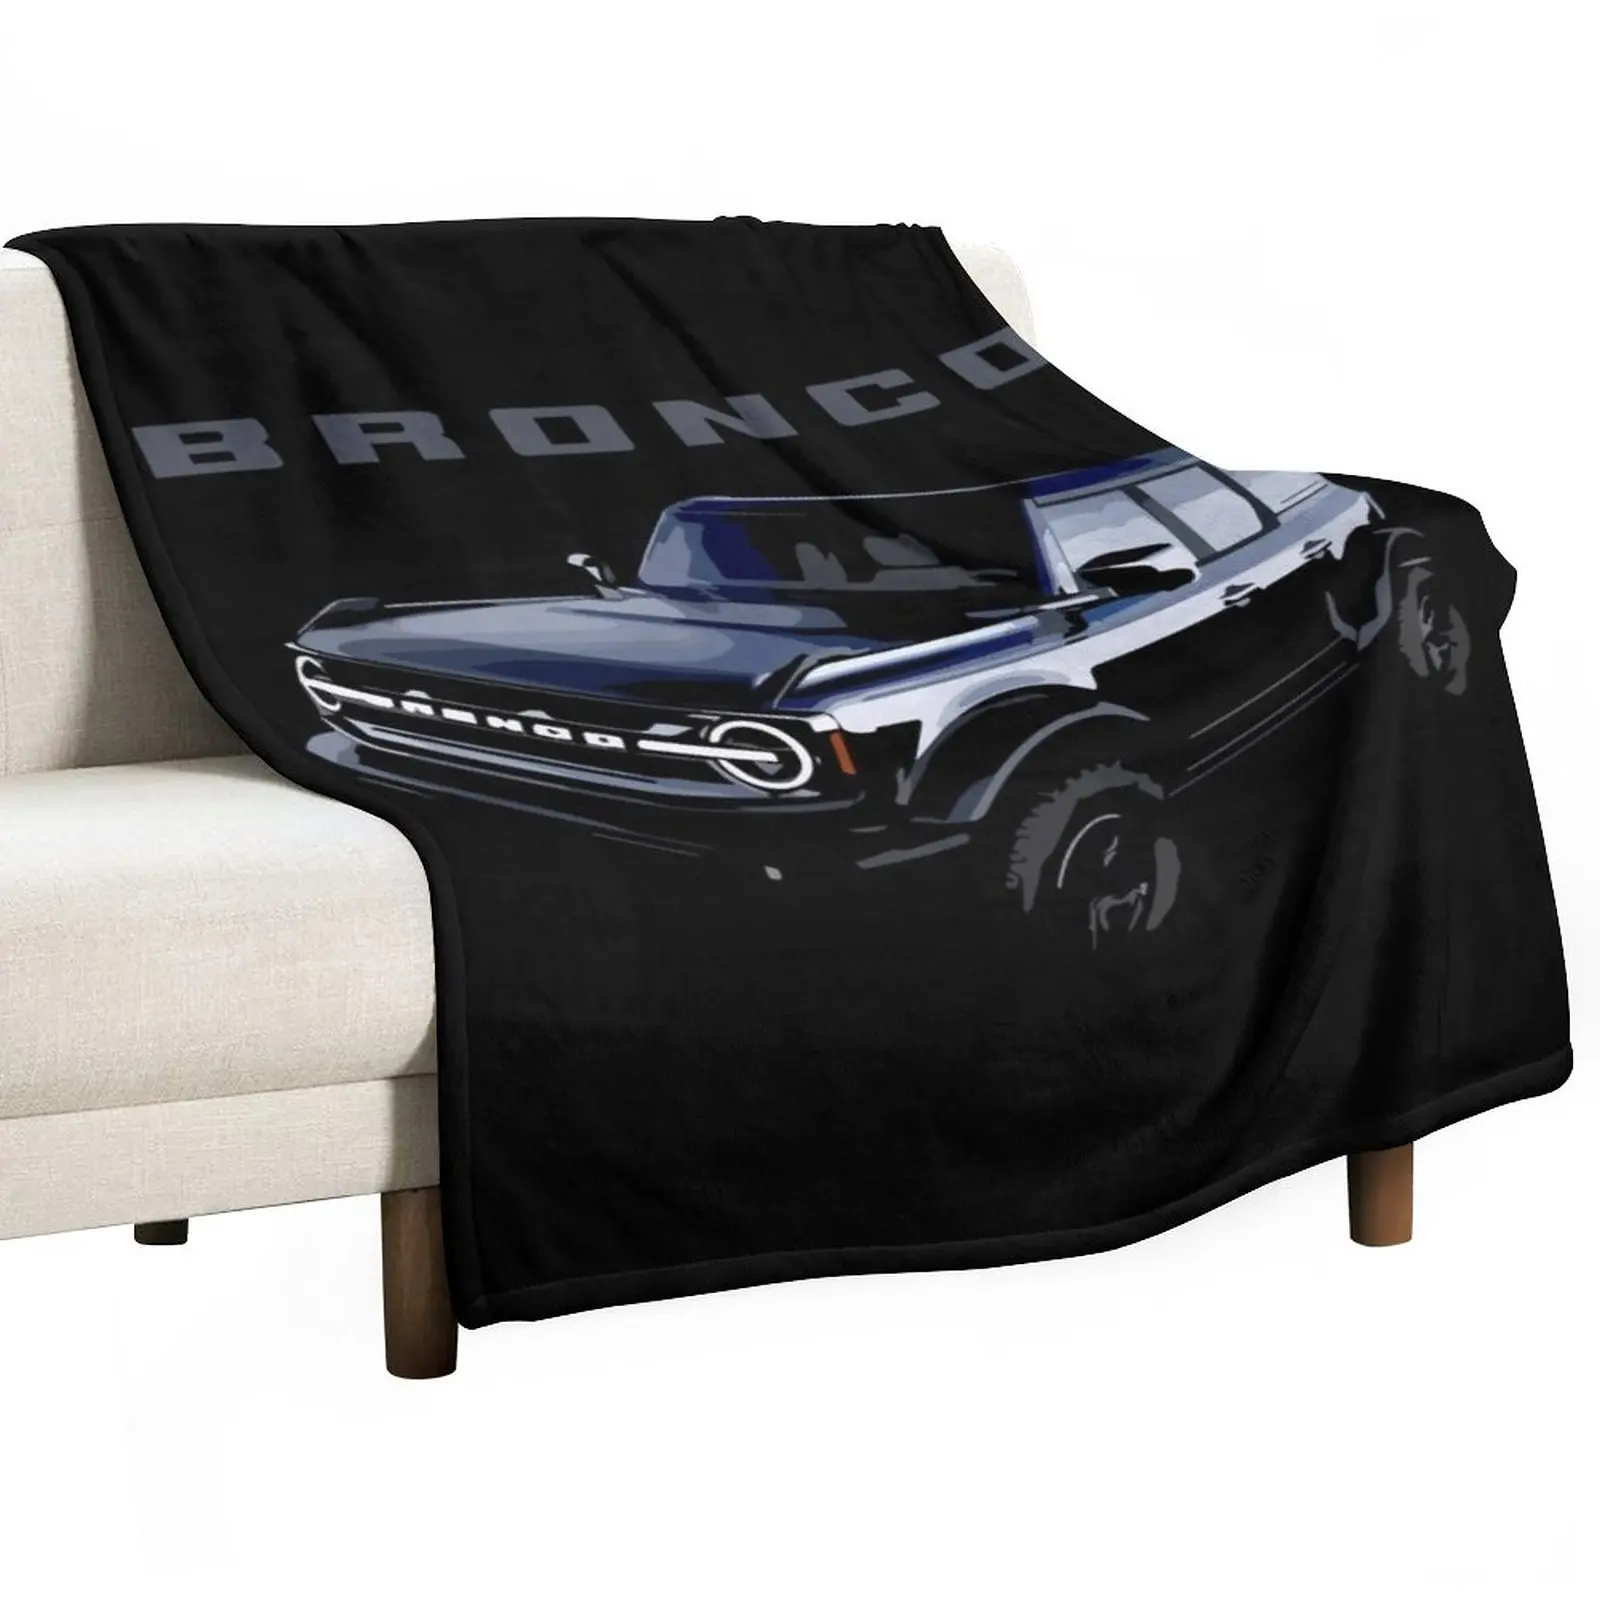 

2021 Bronco Black Throw Blanket Heavy Blanket Luxury St Blanket Custom Blanket Blanket For Decorative Sofa